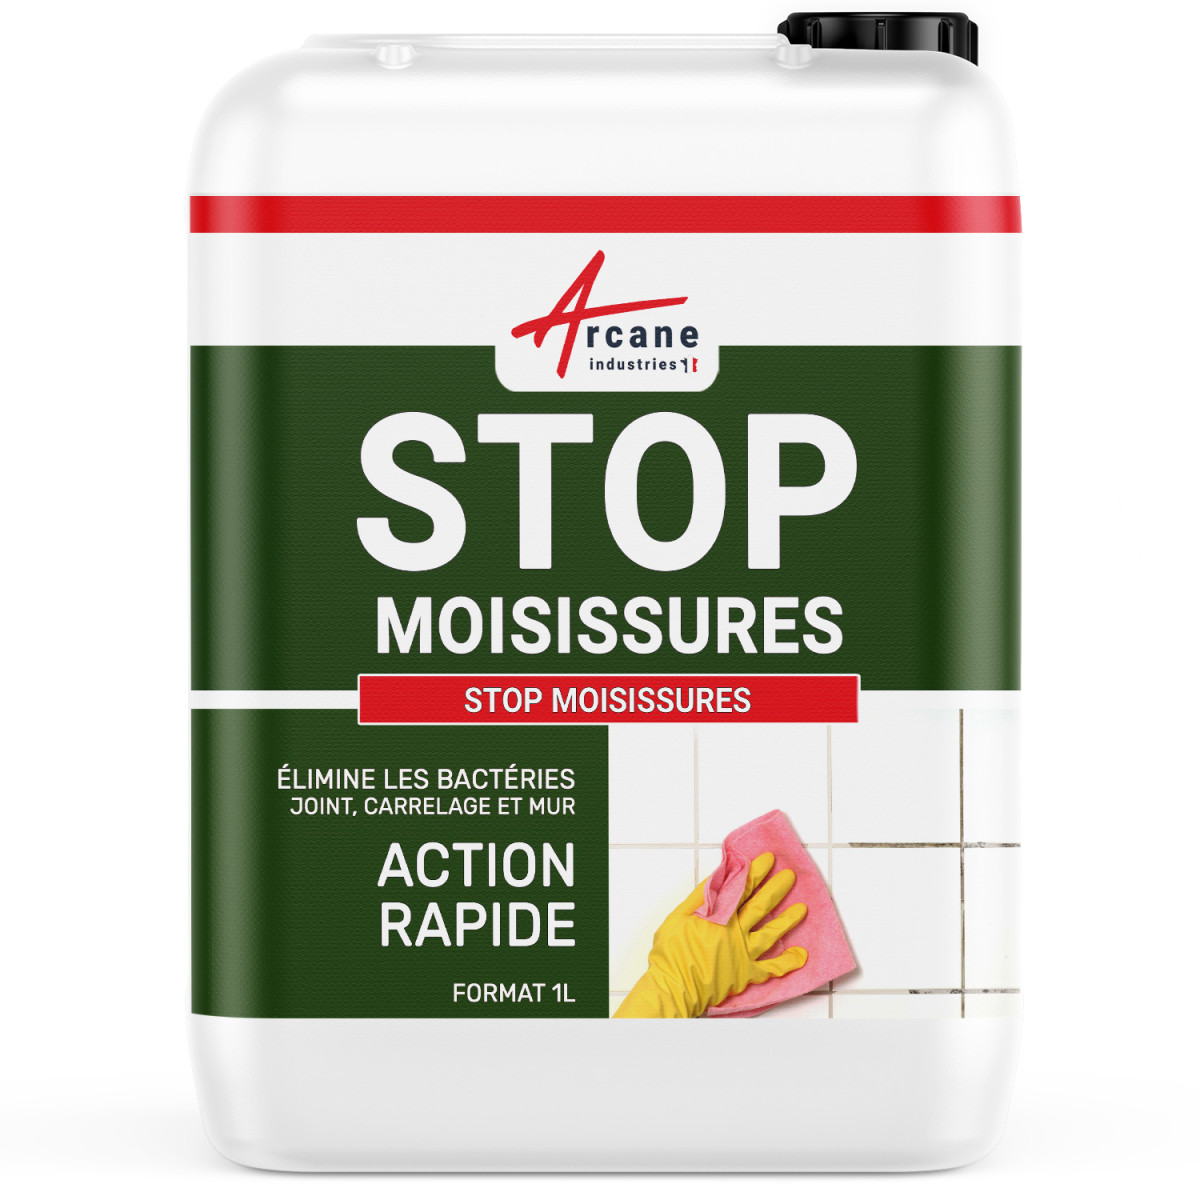 Anti-moisissures haute performance - STOP MOISISSURES